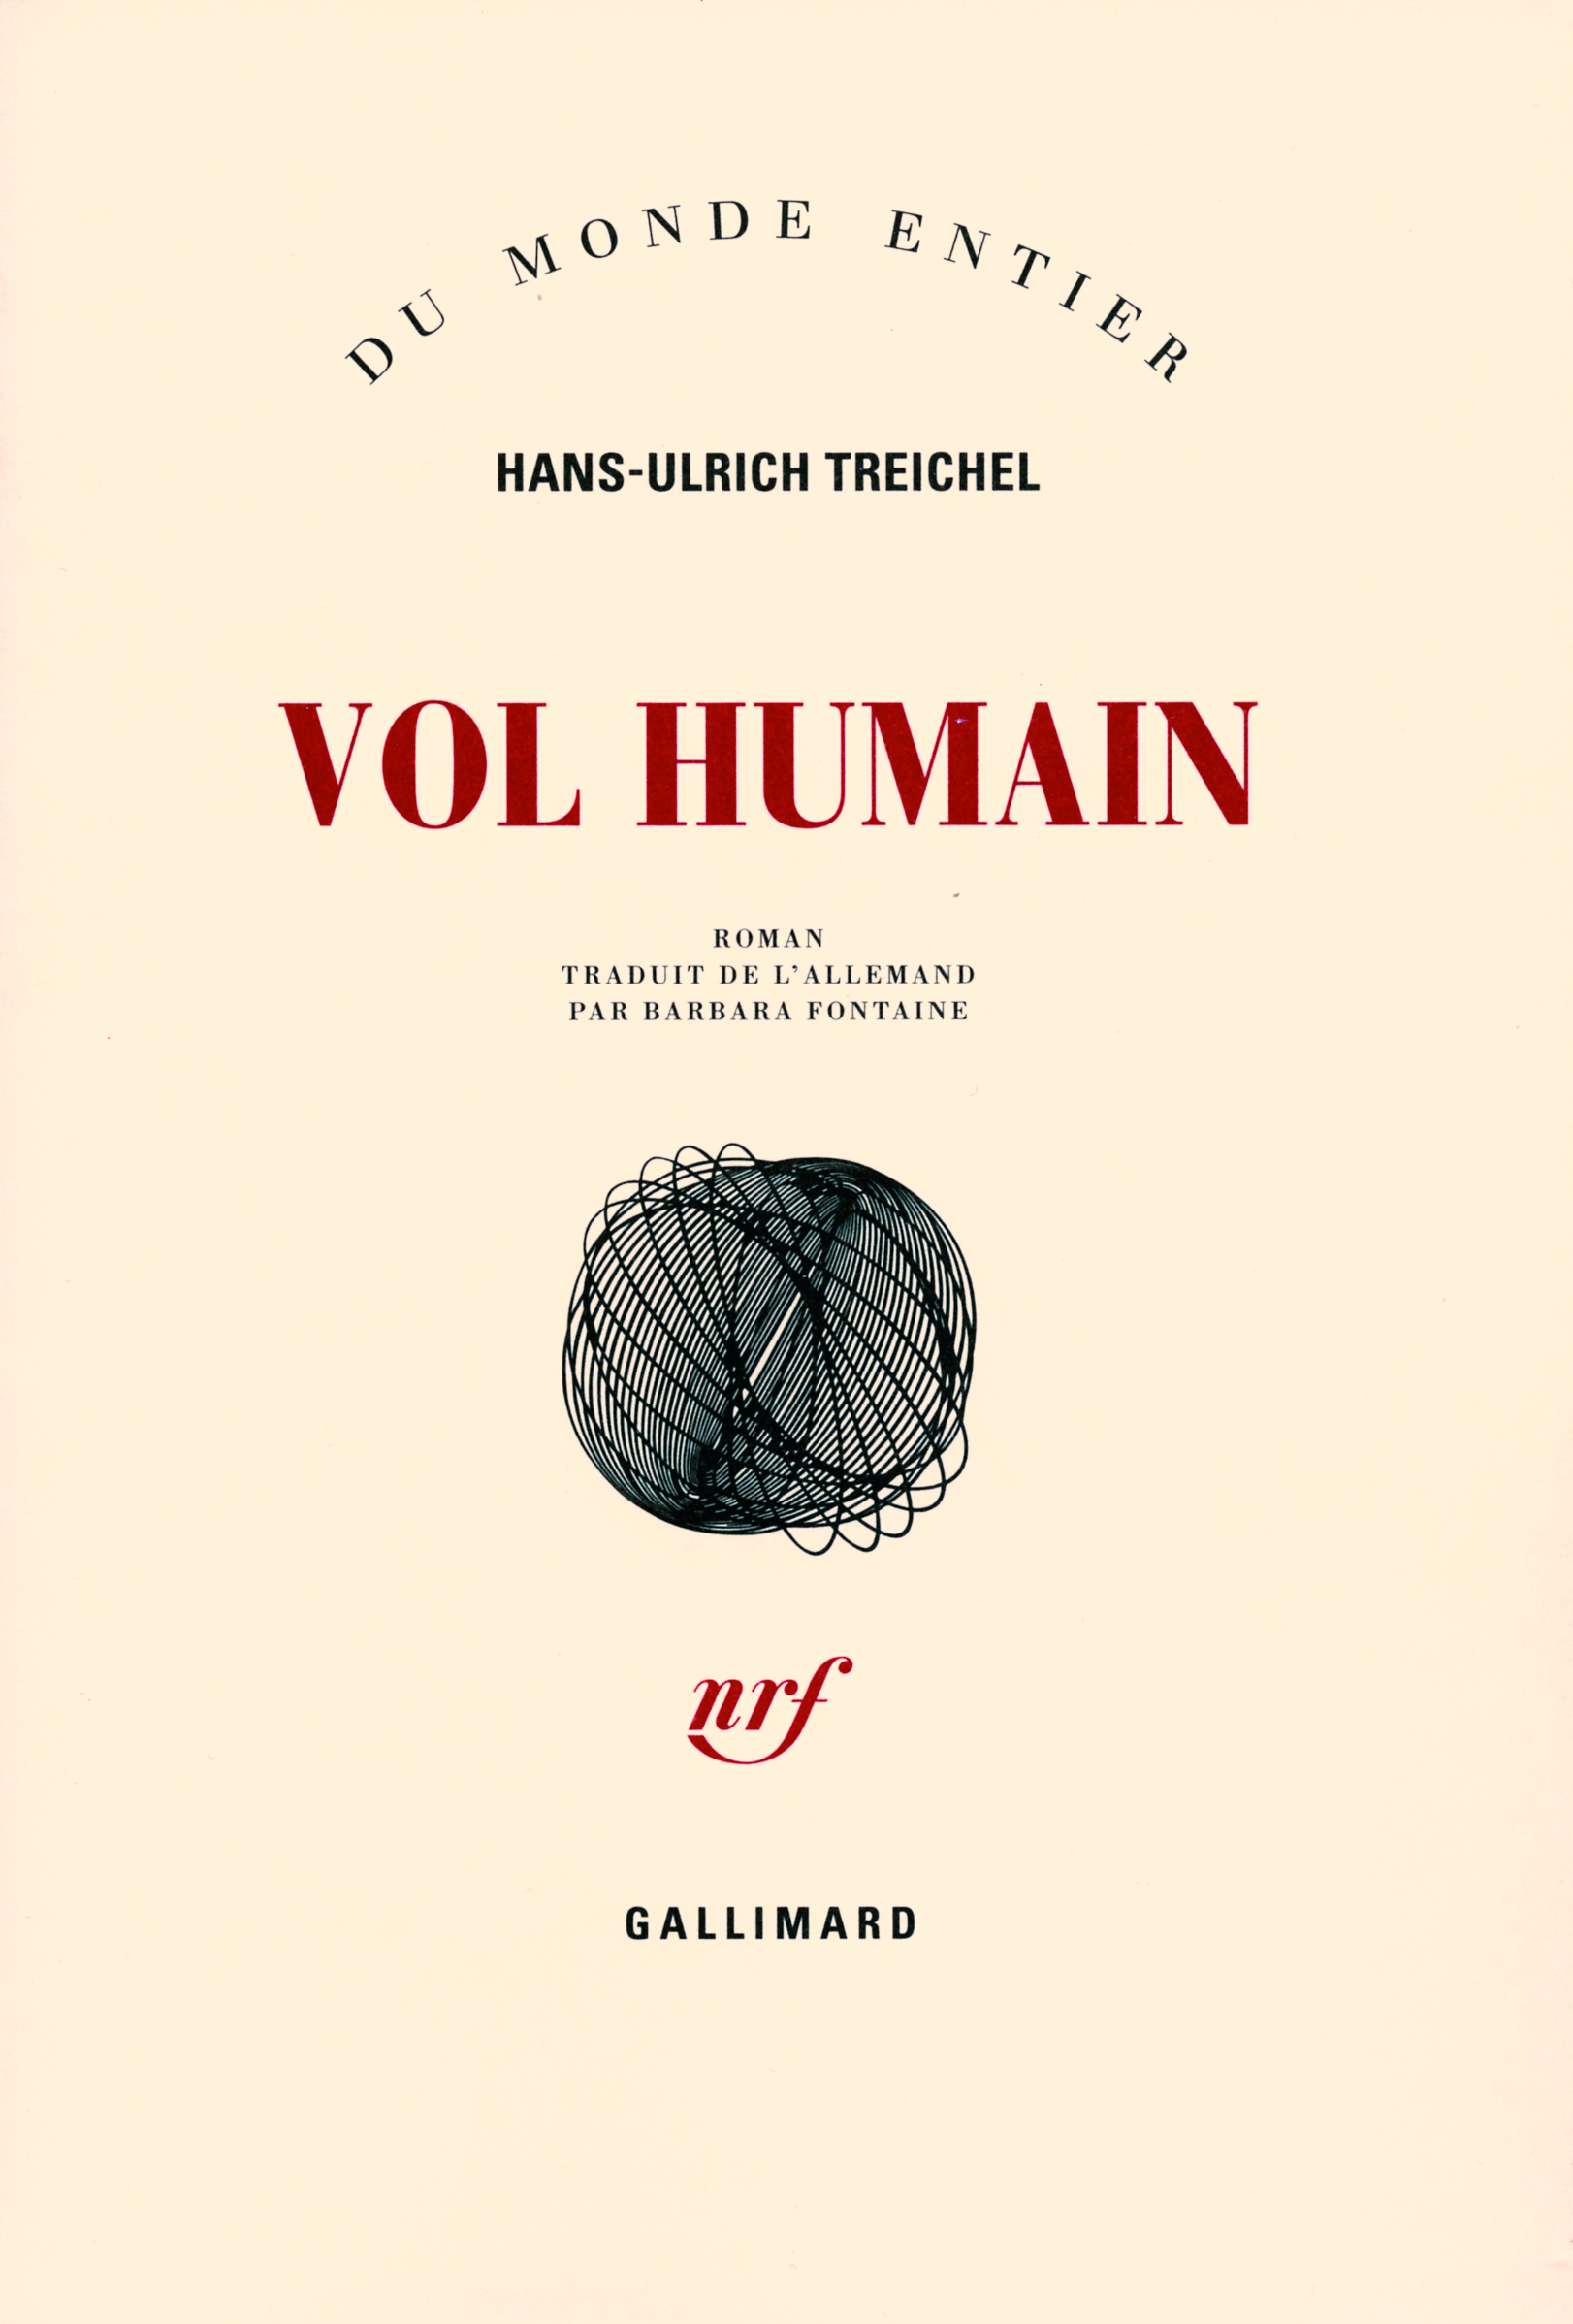 Vol humain (9782070780662-front-cover)